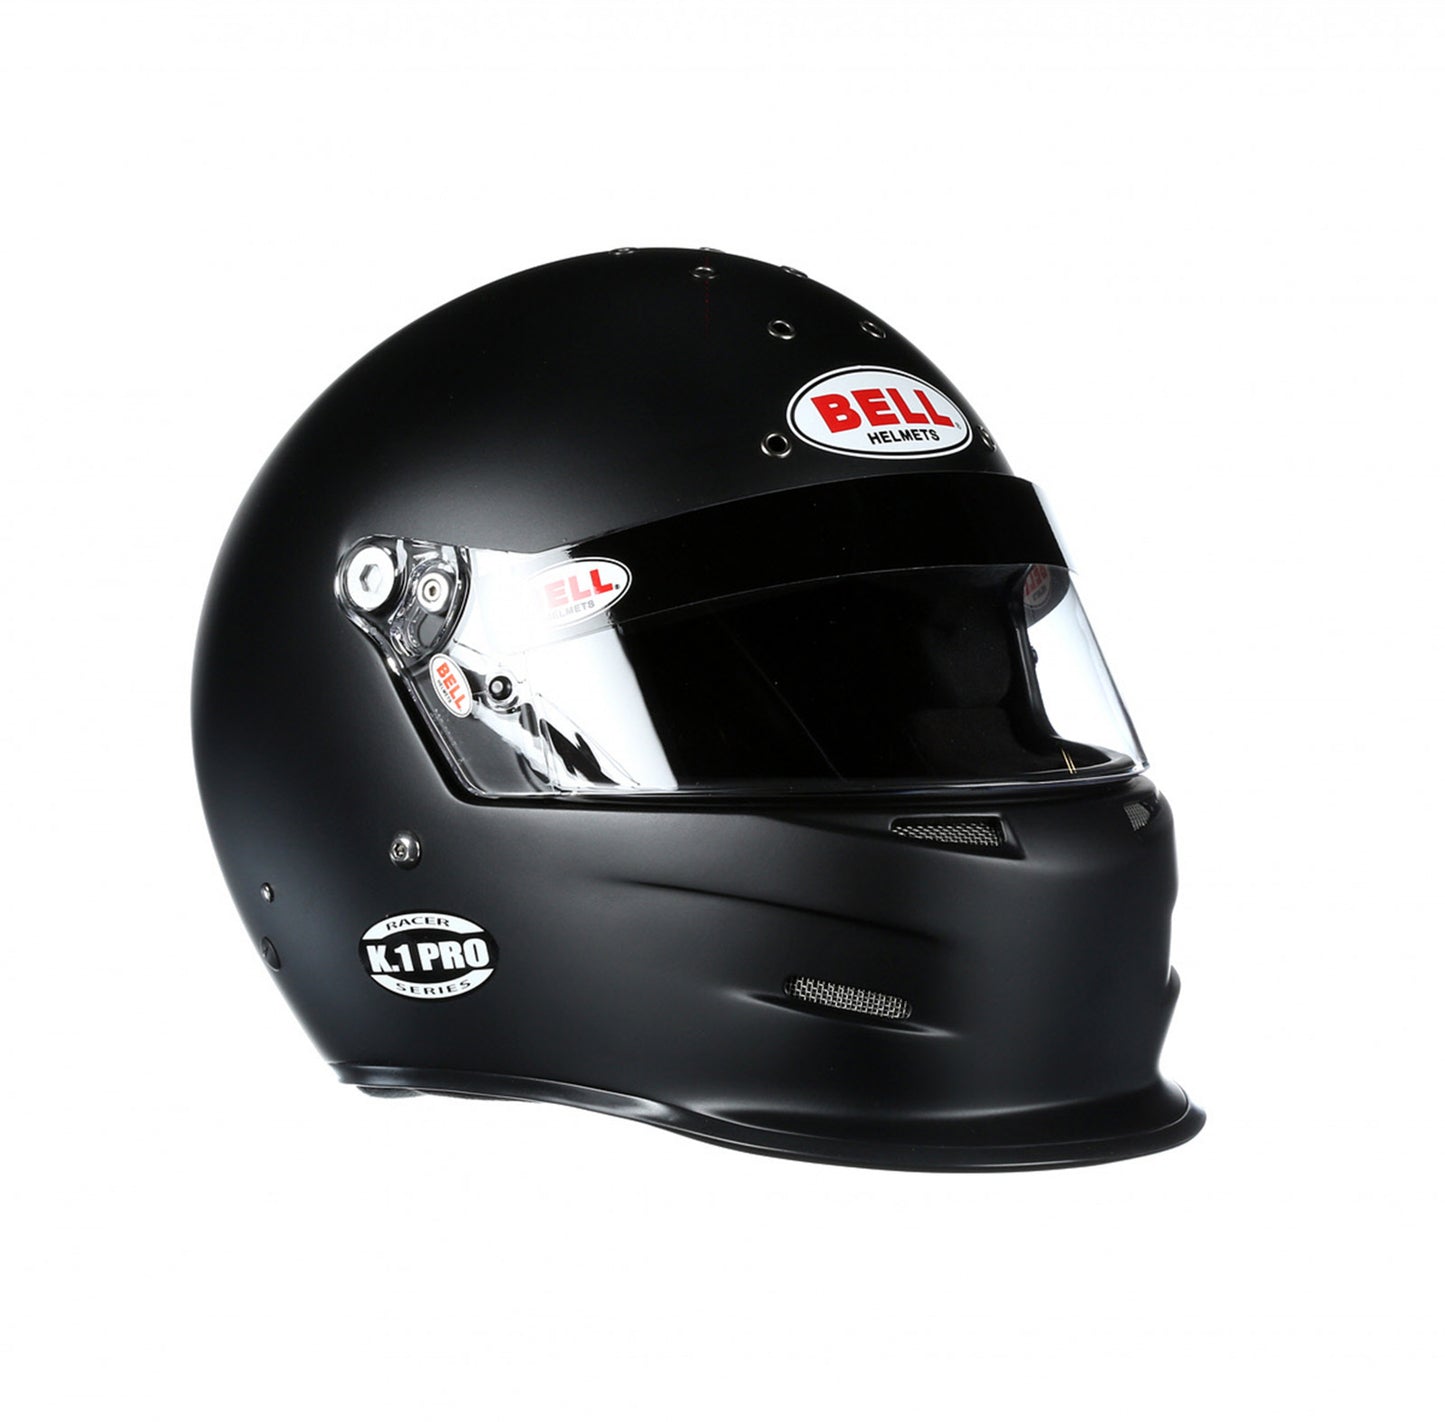 Bell K1 Pro Matte Black Helmet Size Small 1420A13